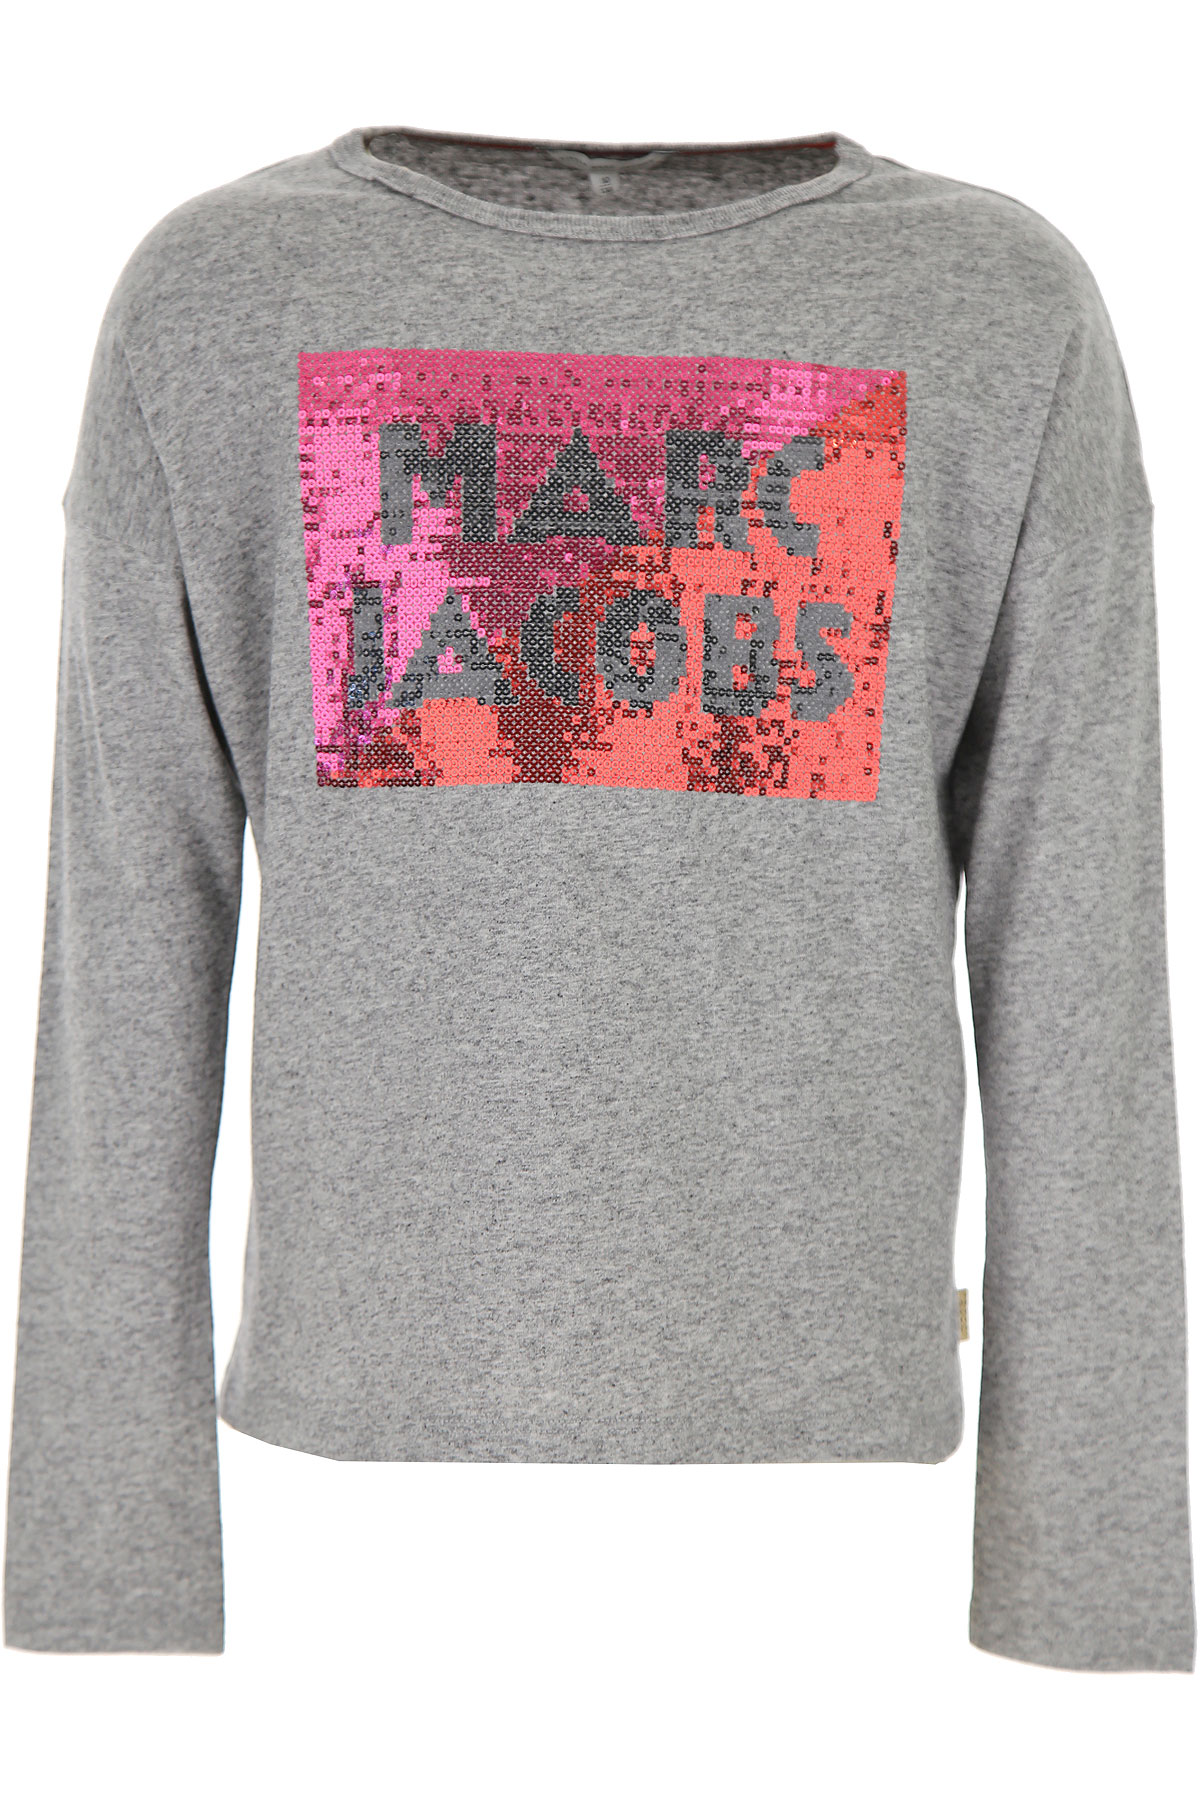 Marc Jacobs Kinder T-Shirt für Mädchen Günstig im Sale, Grau, Baumwolle, 2017, 10Y 12Y 14Y